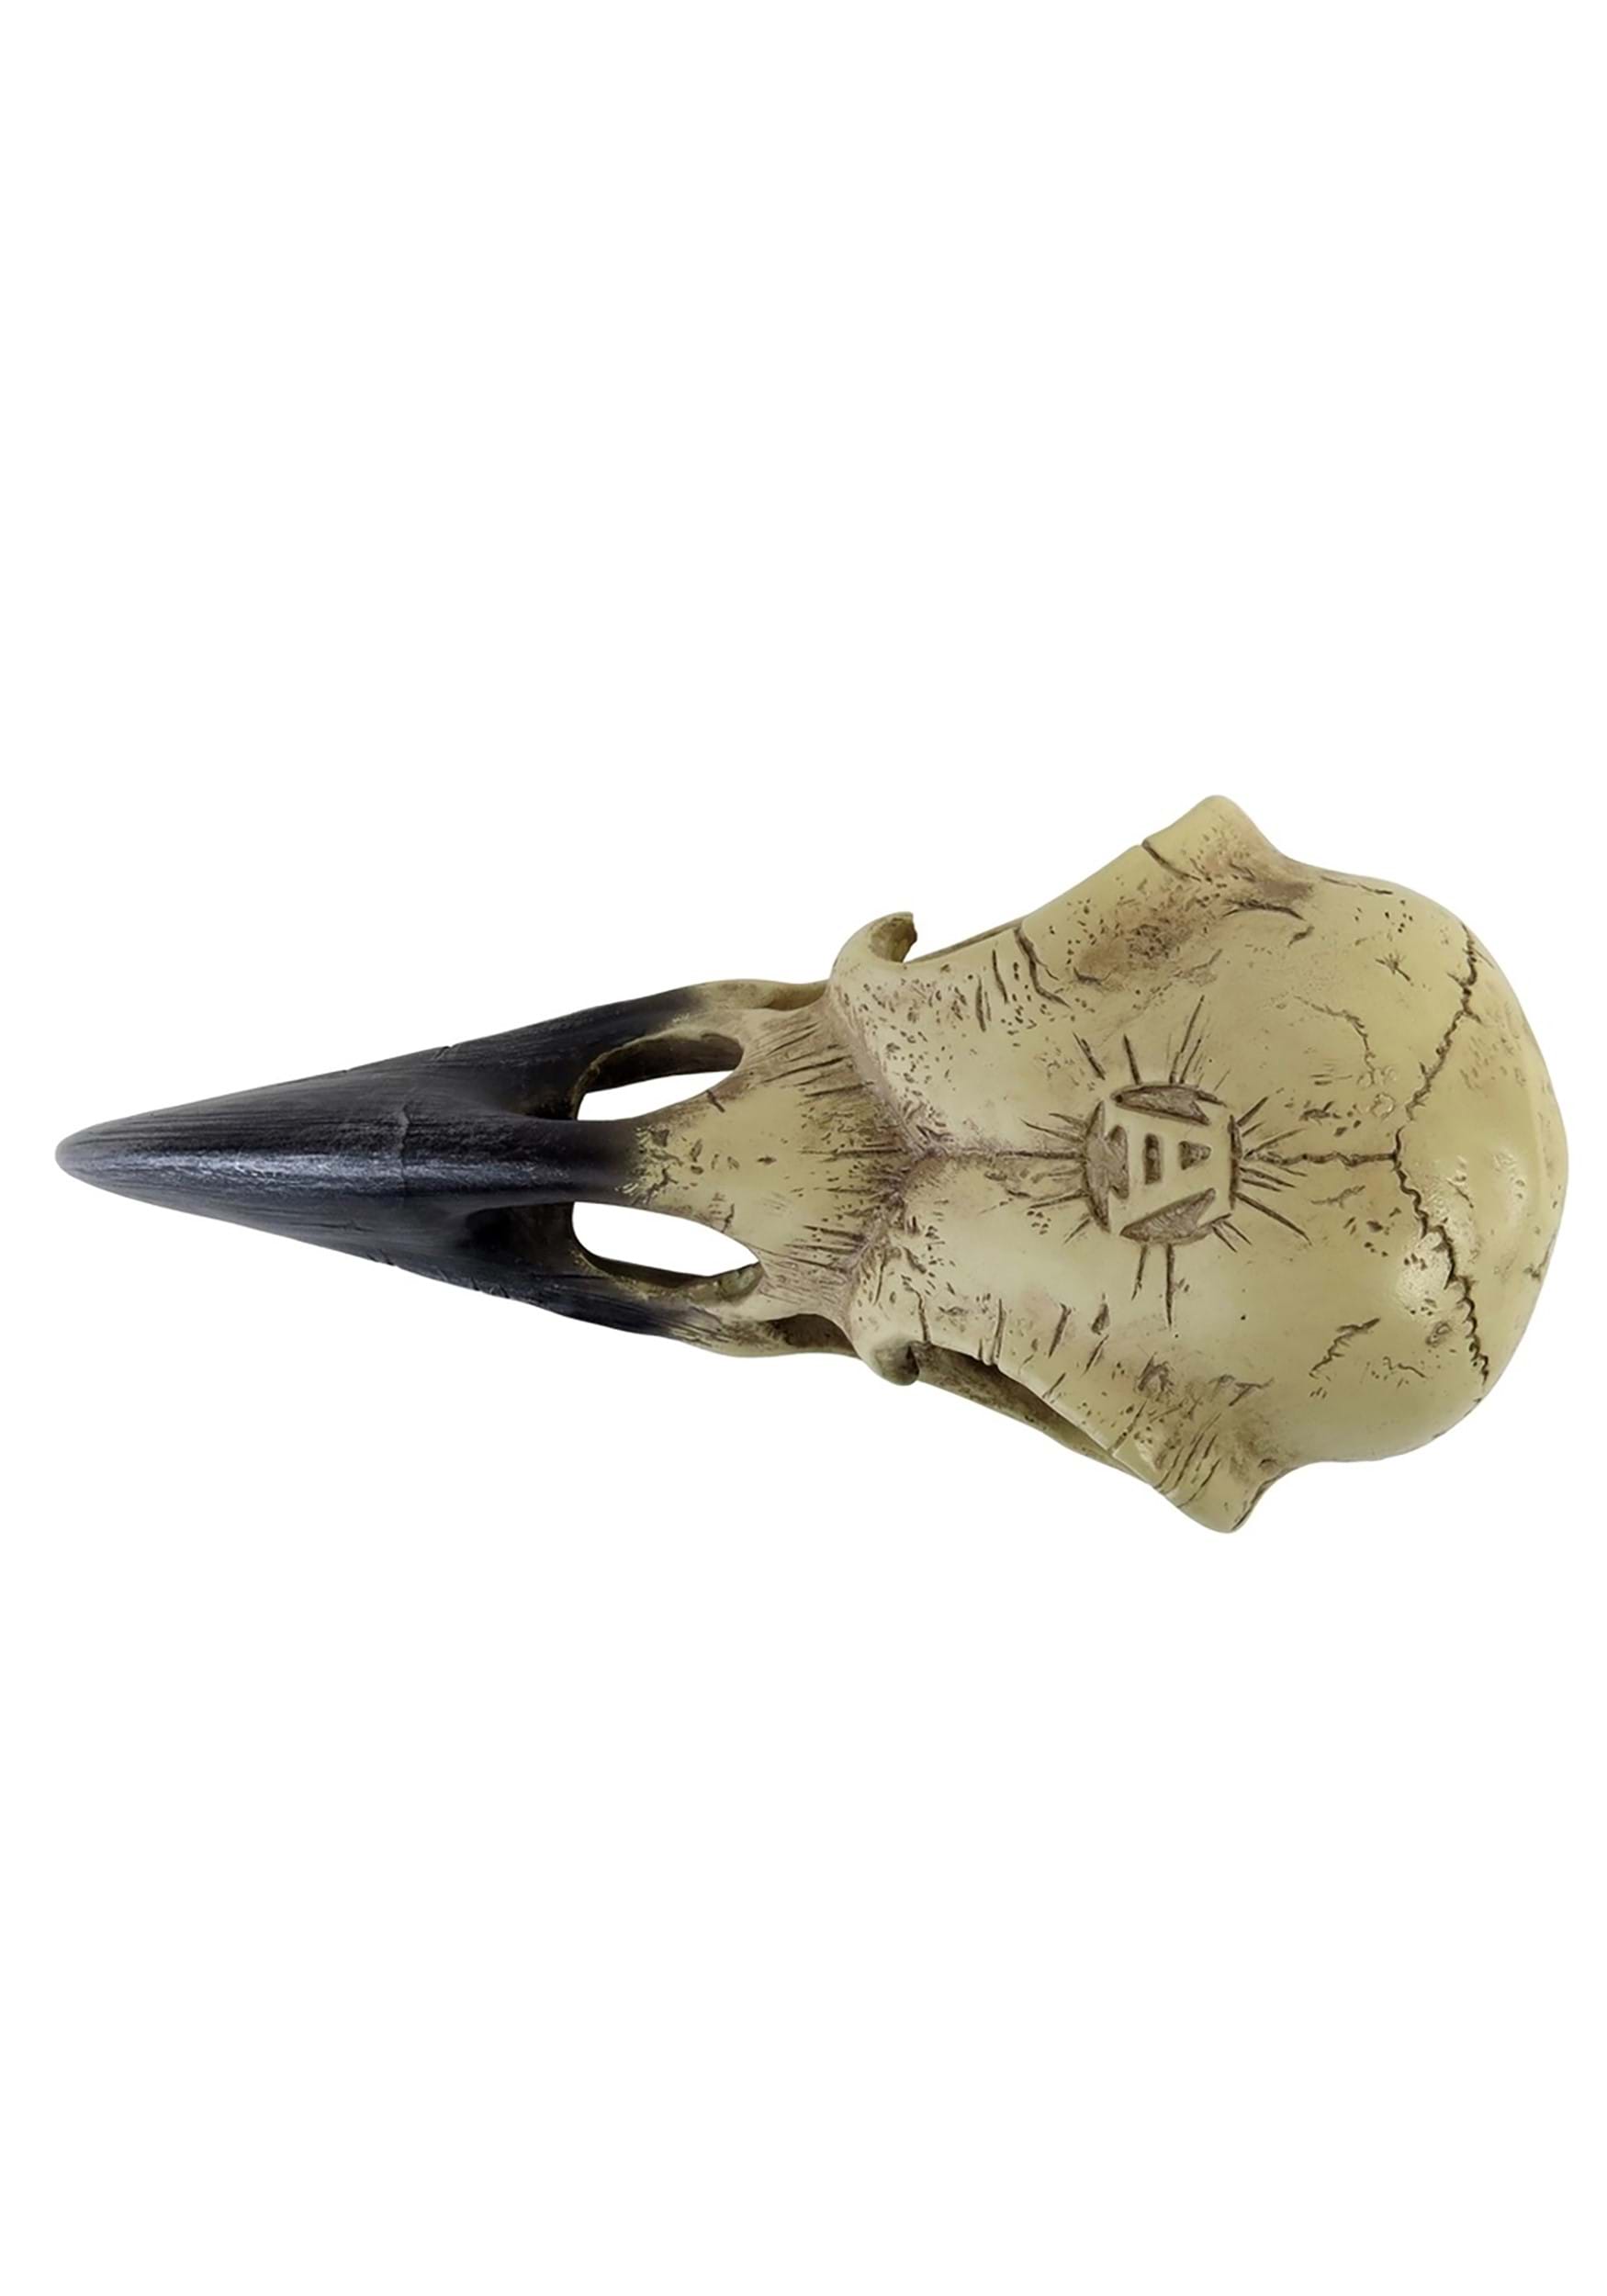 6-Inch Corvus Alchemica Skull Prop